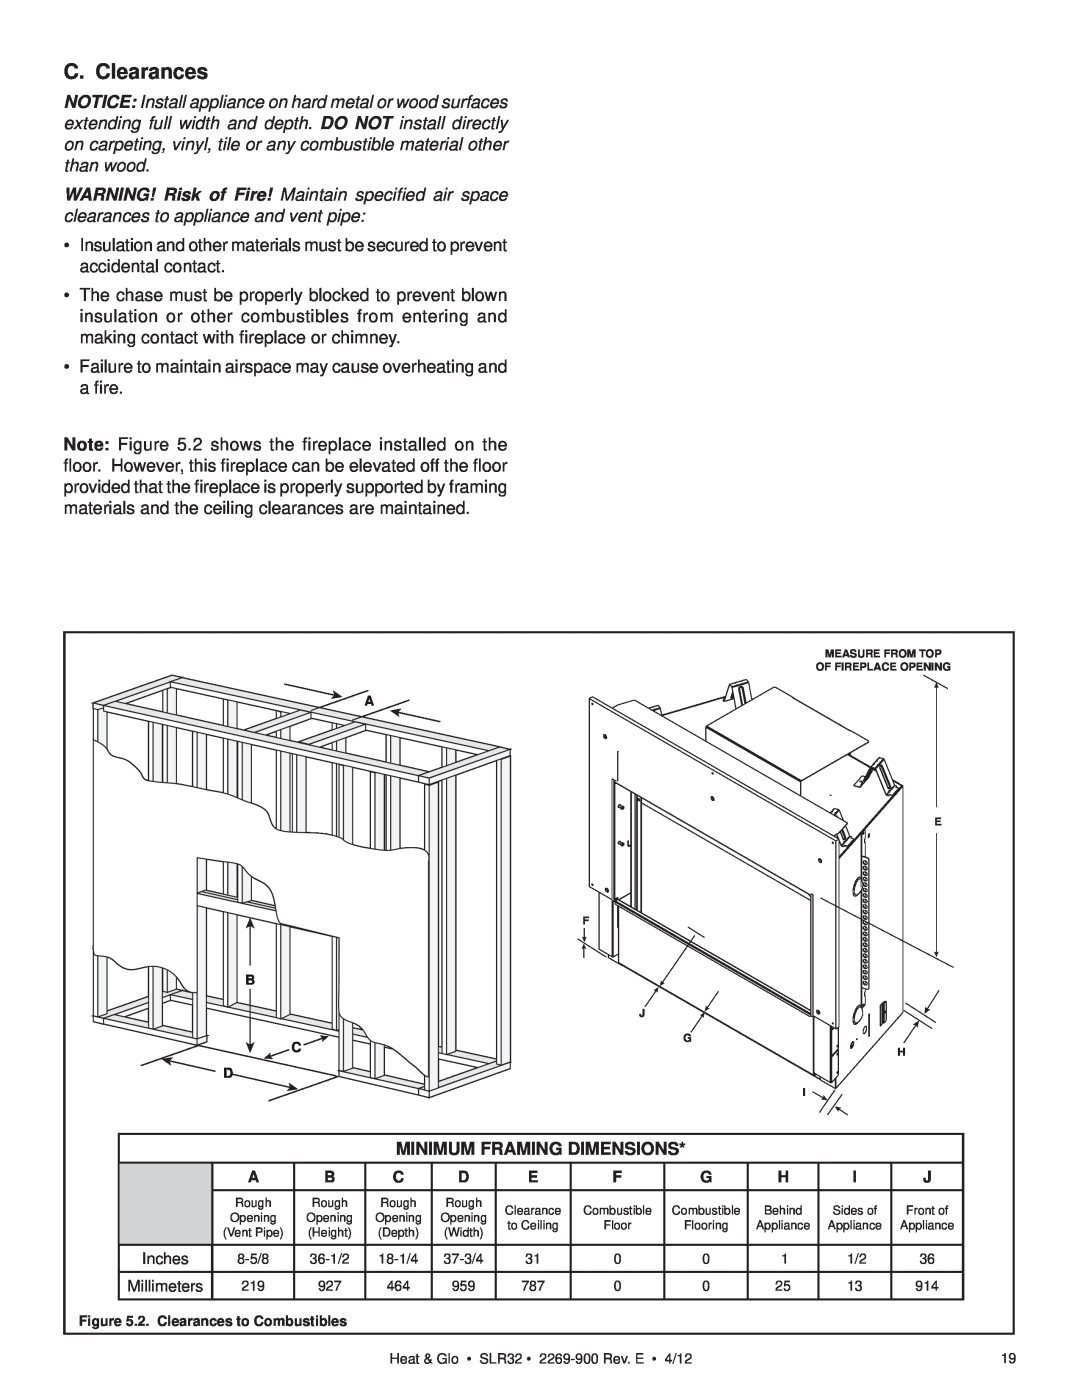 Heat & Glo LifeStyle SLR32 owner manual C. Clearances, Minimum Framing Dimensions 